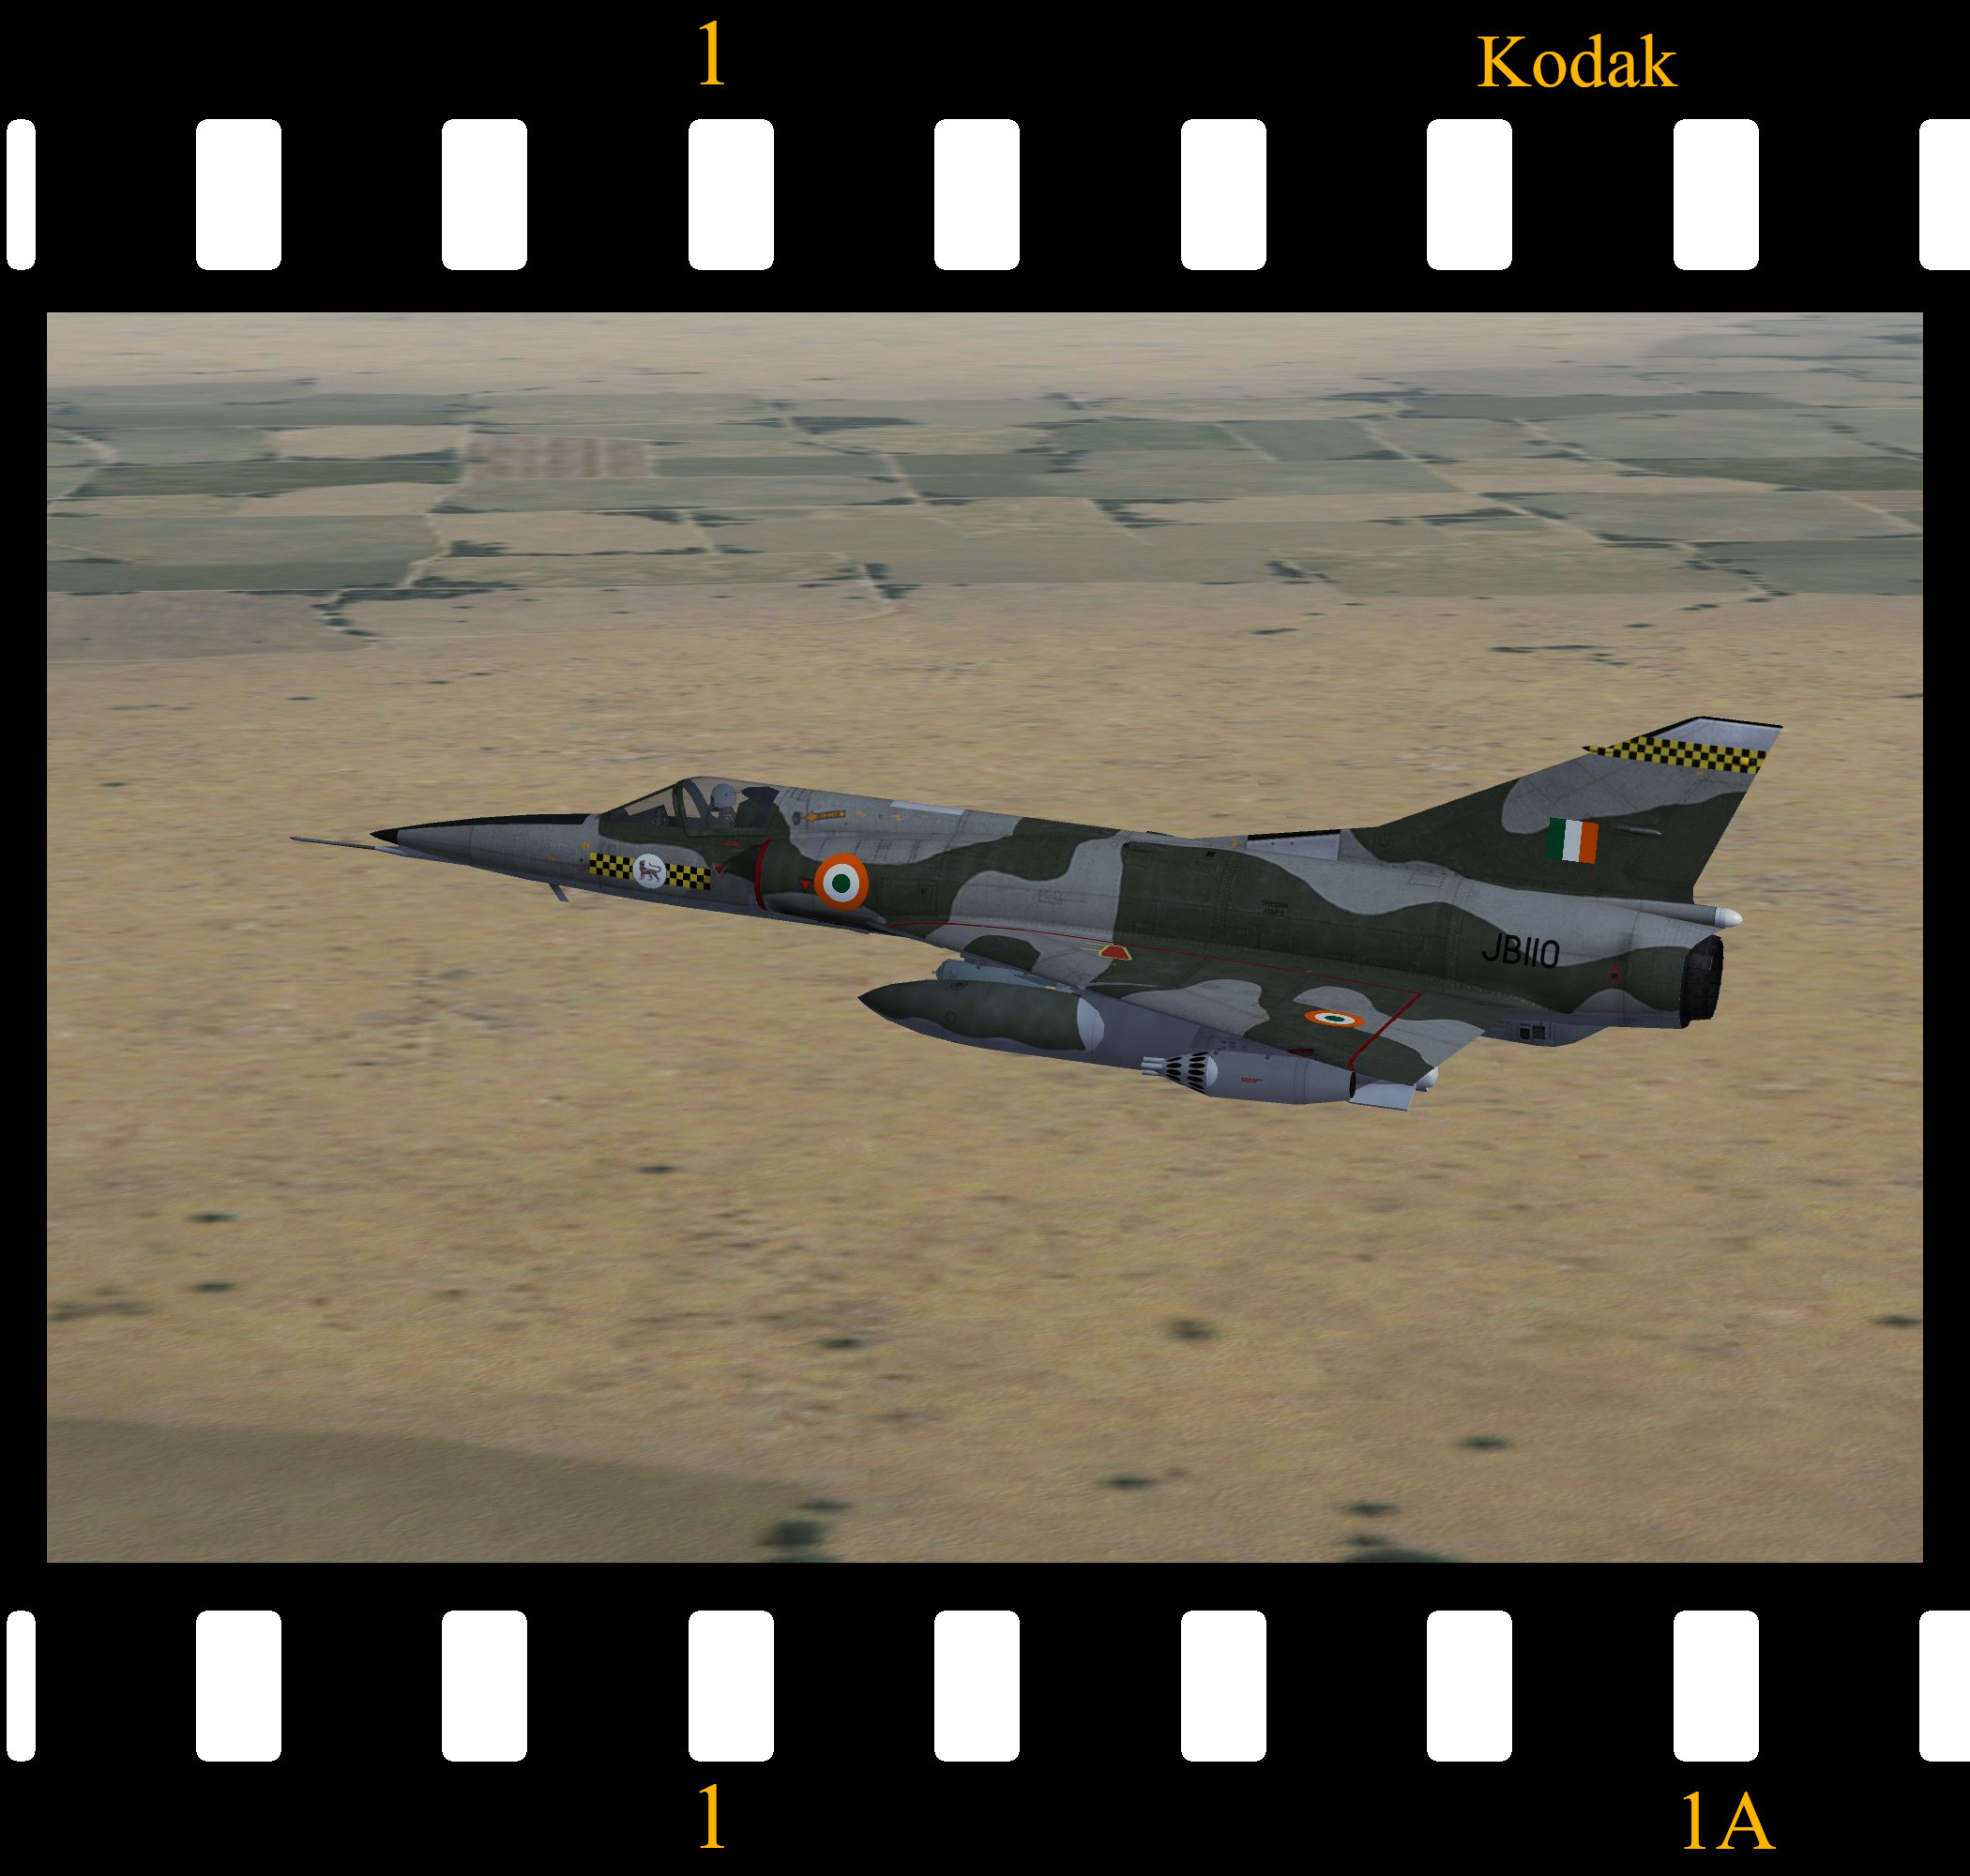 [Fictional] Dassault Mirage 5 - Indian Air Force